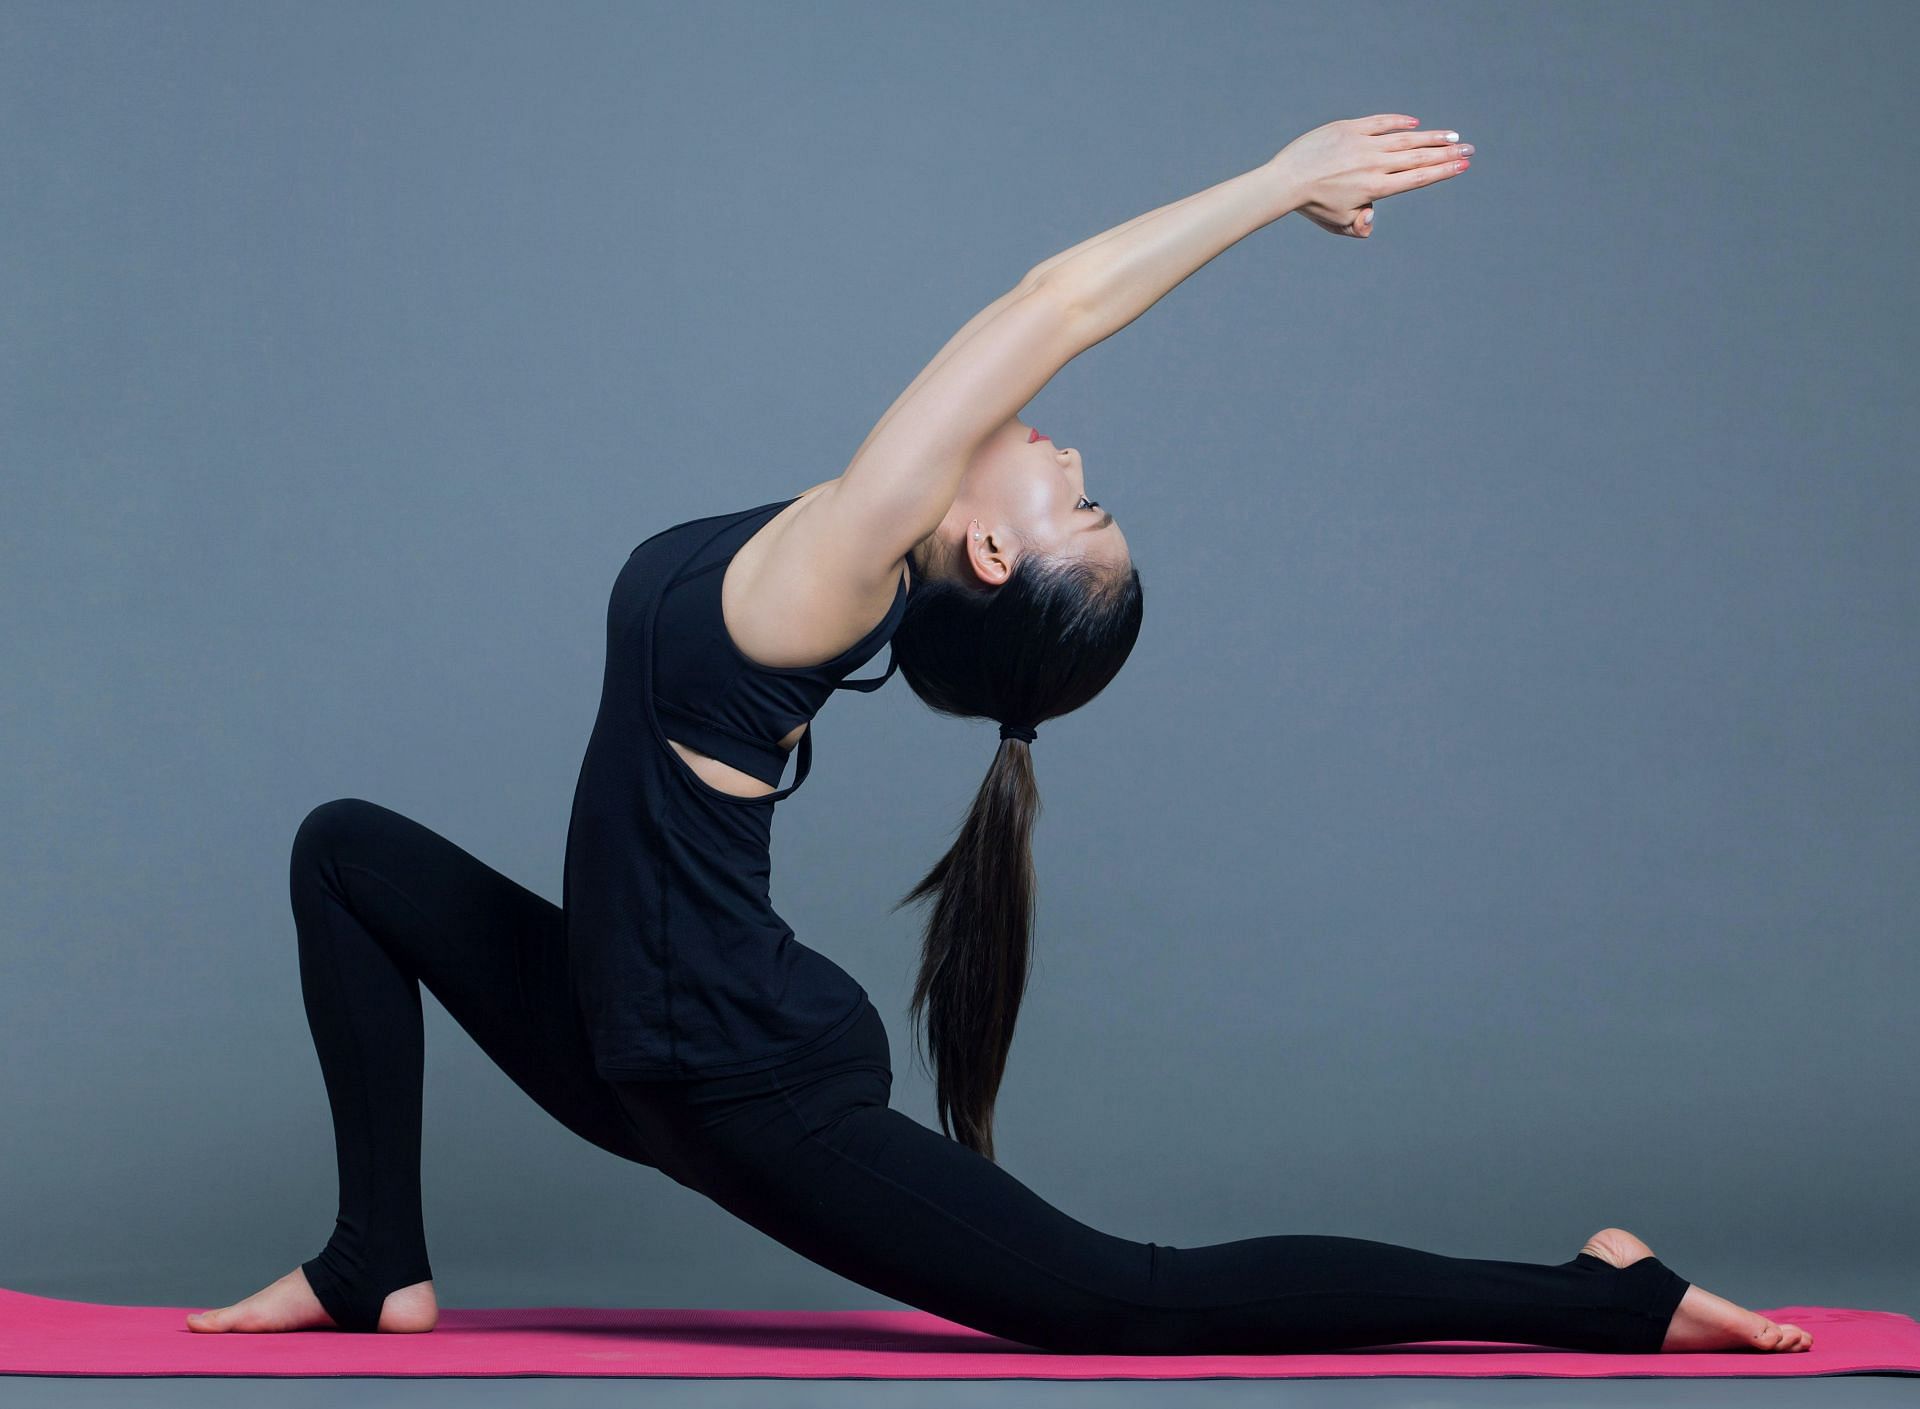 Slim young sportswoman stretching body in split · Free Stock Photo